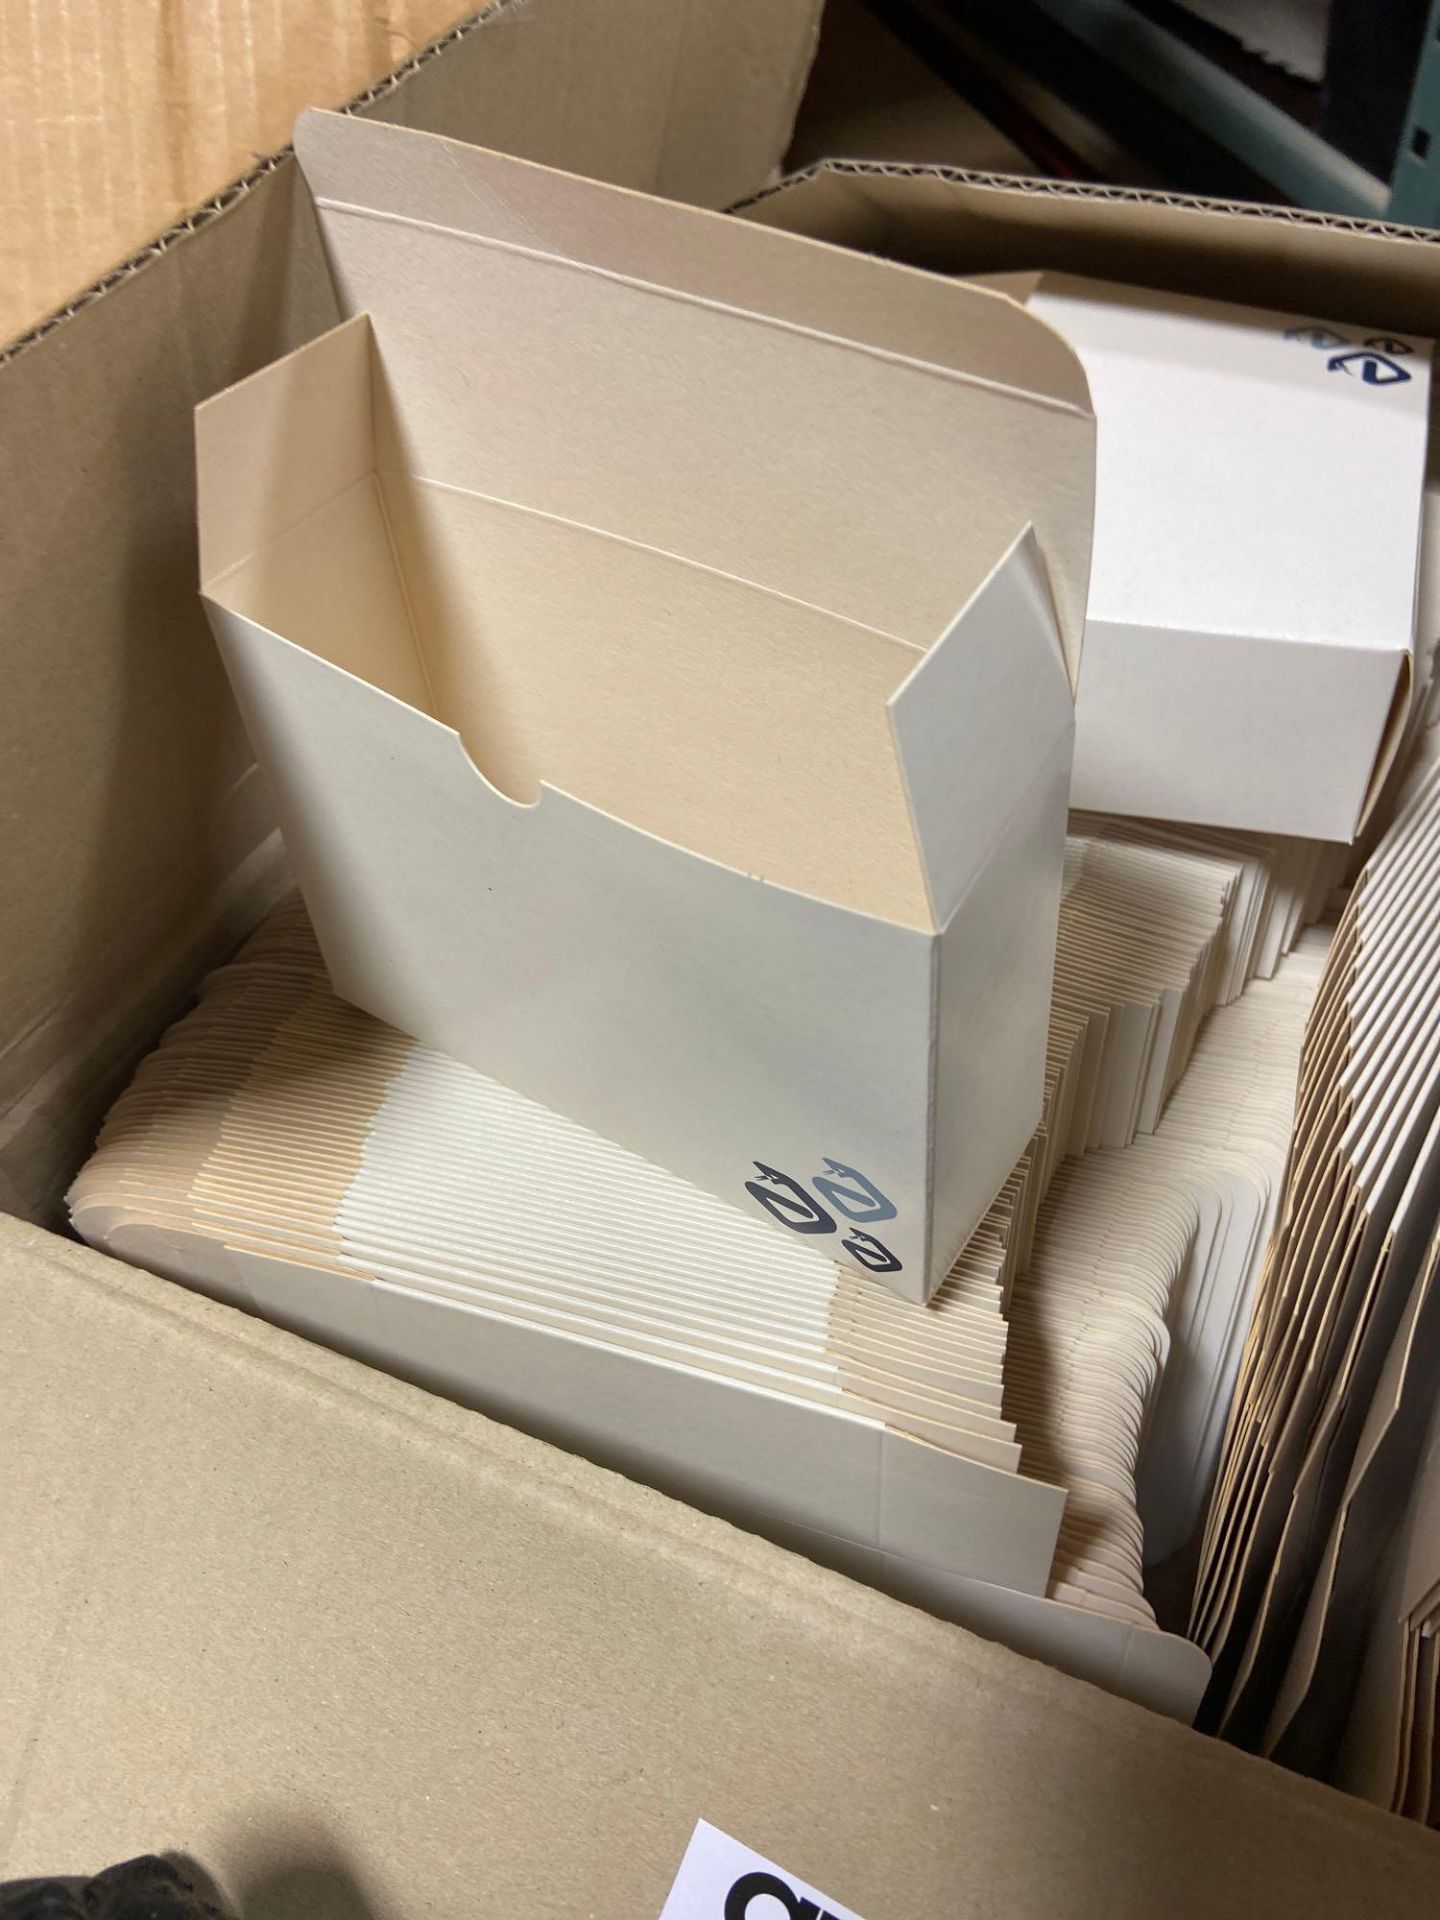 2 Boxes Folding Cartons - Image 2 of 3